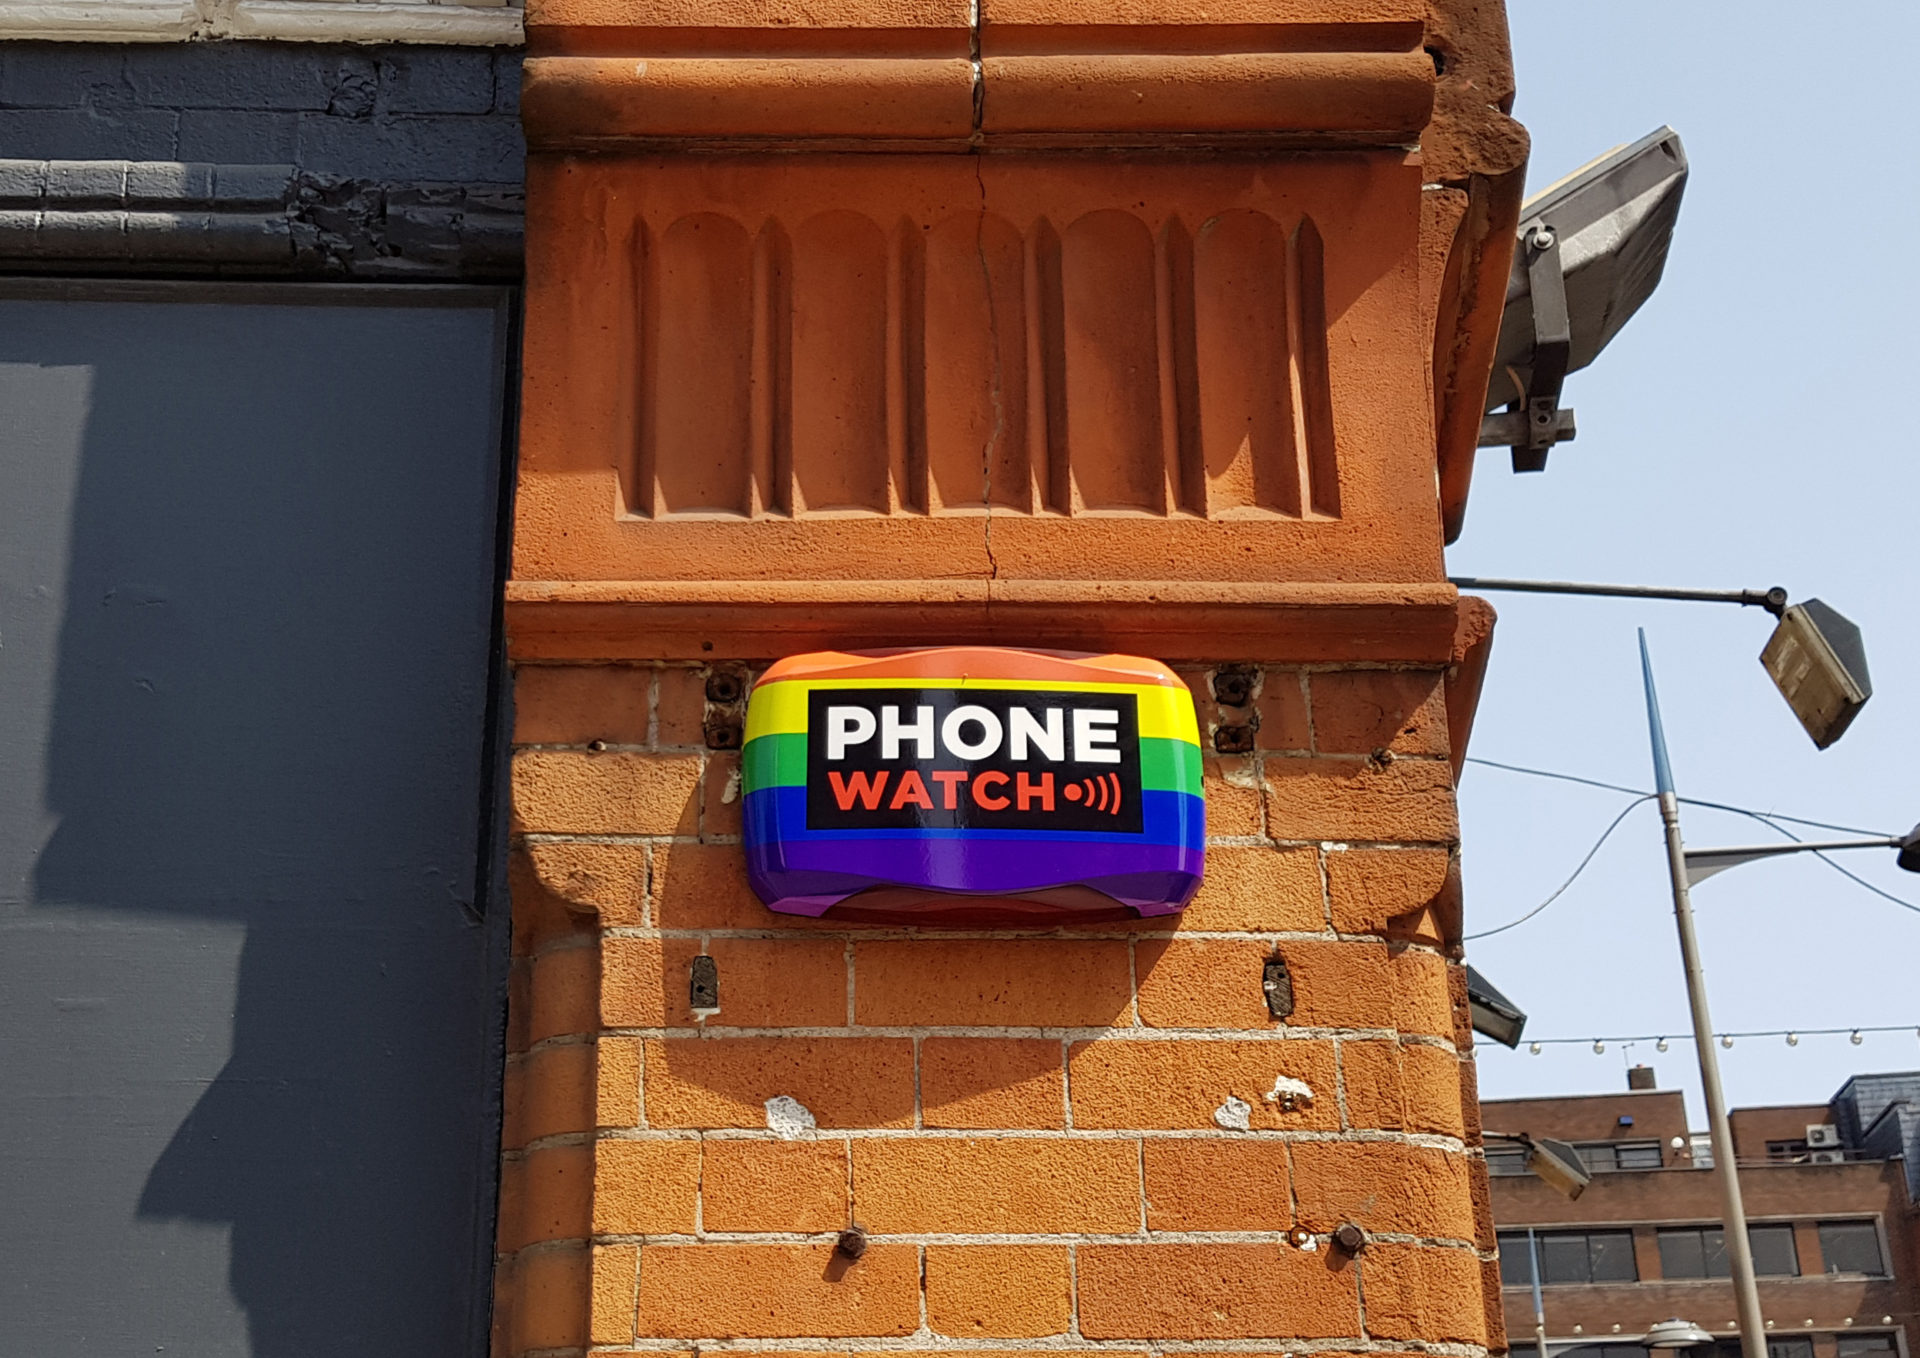 A PhoneWatch alarm box in Dublin, 28-6-19